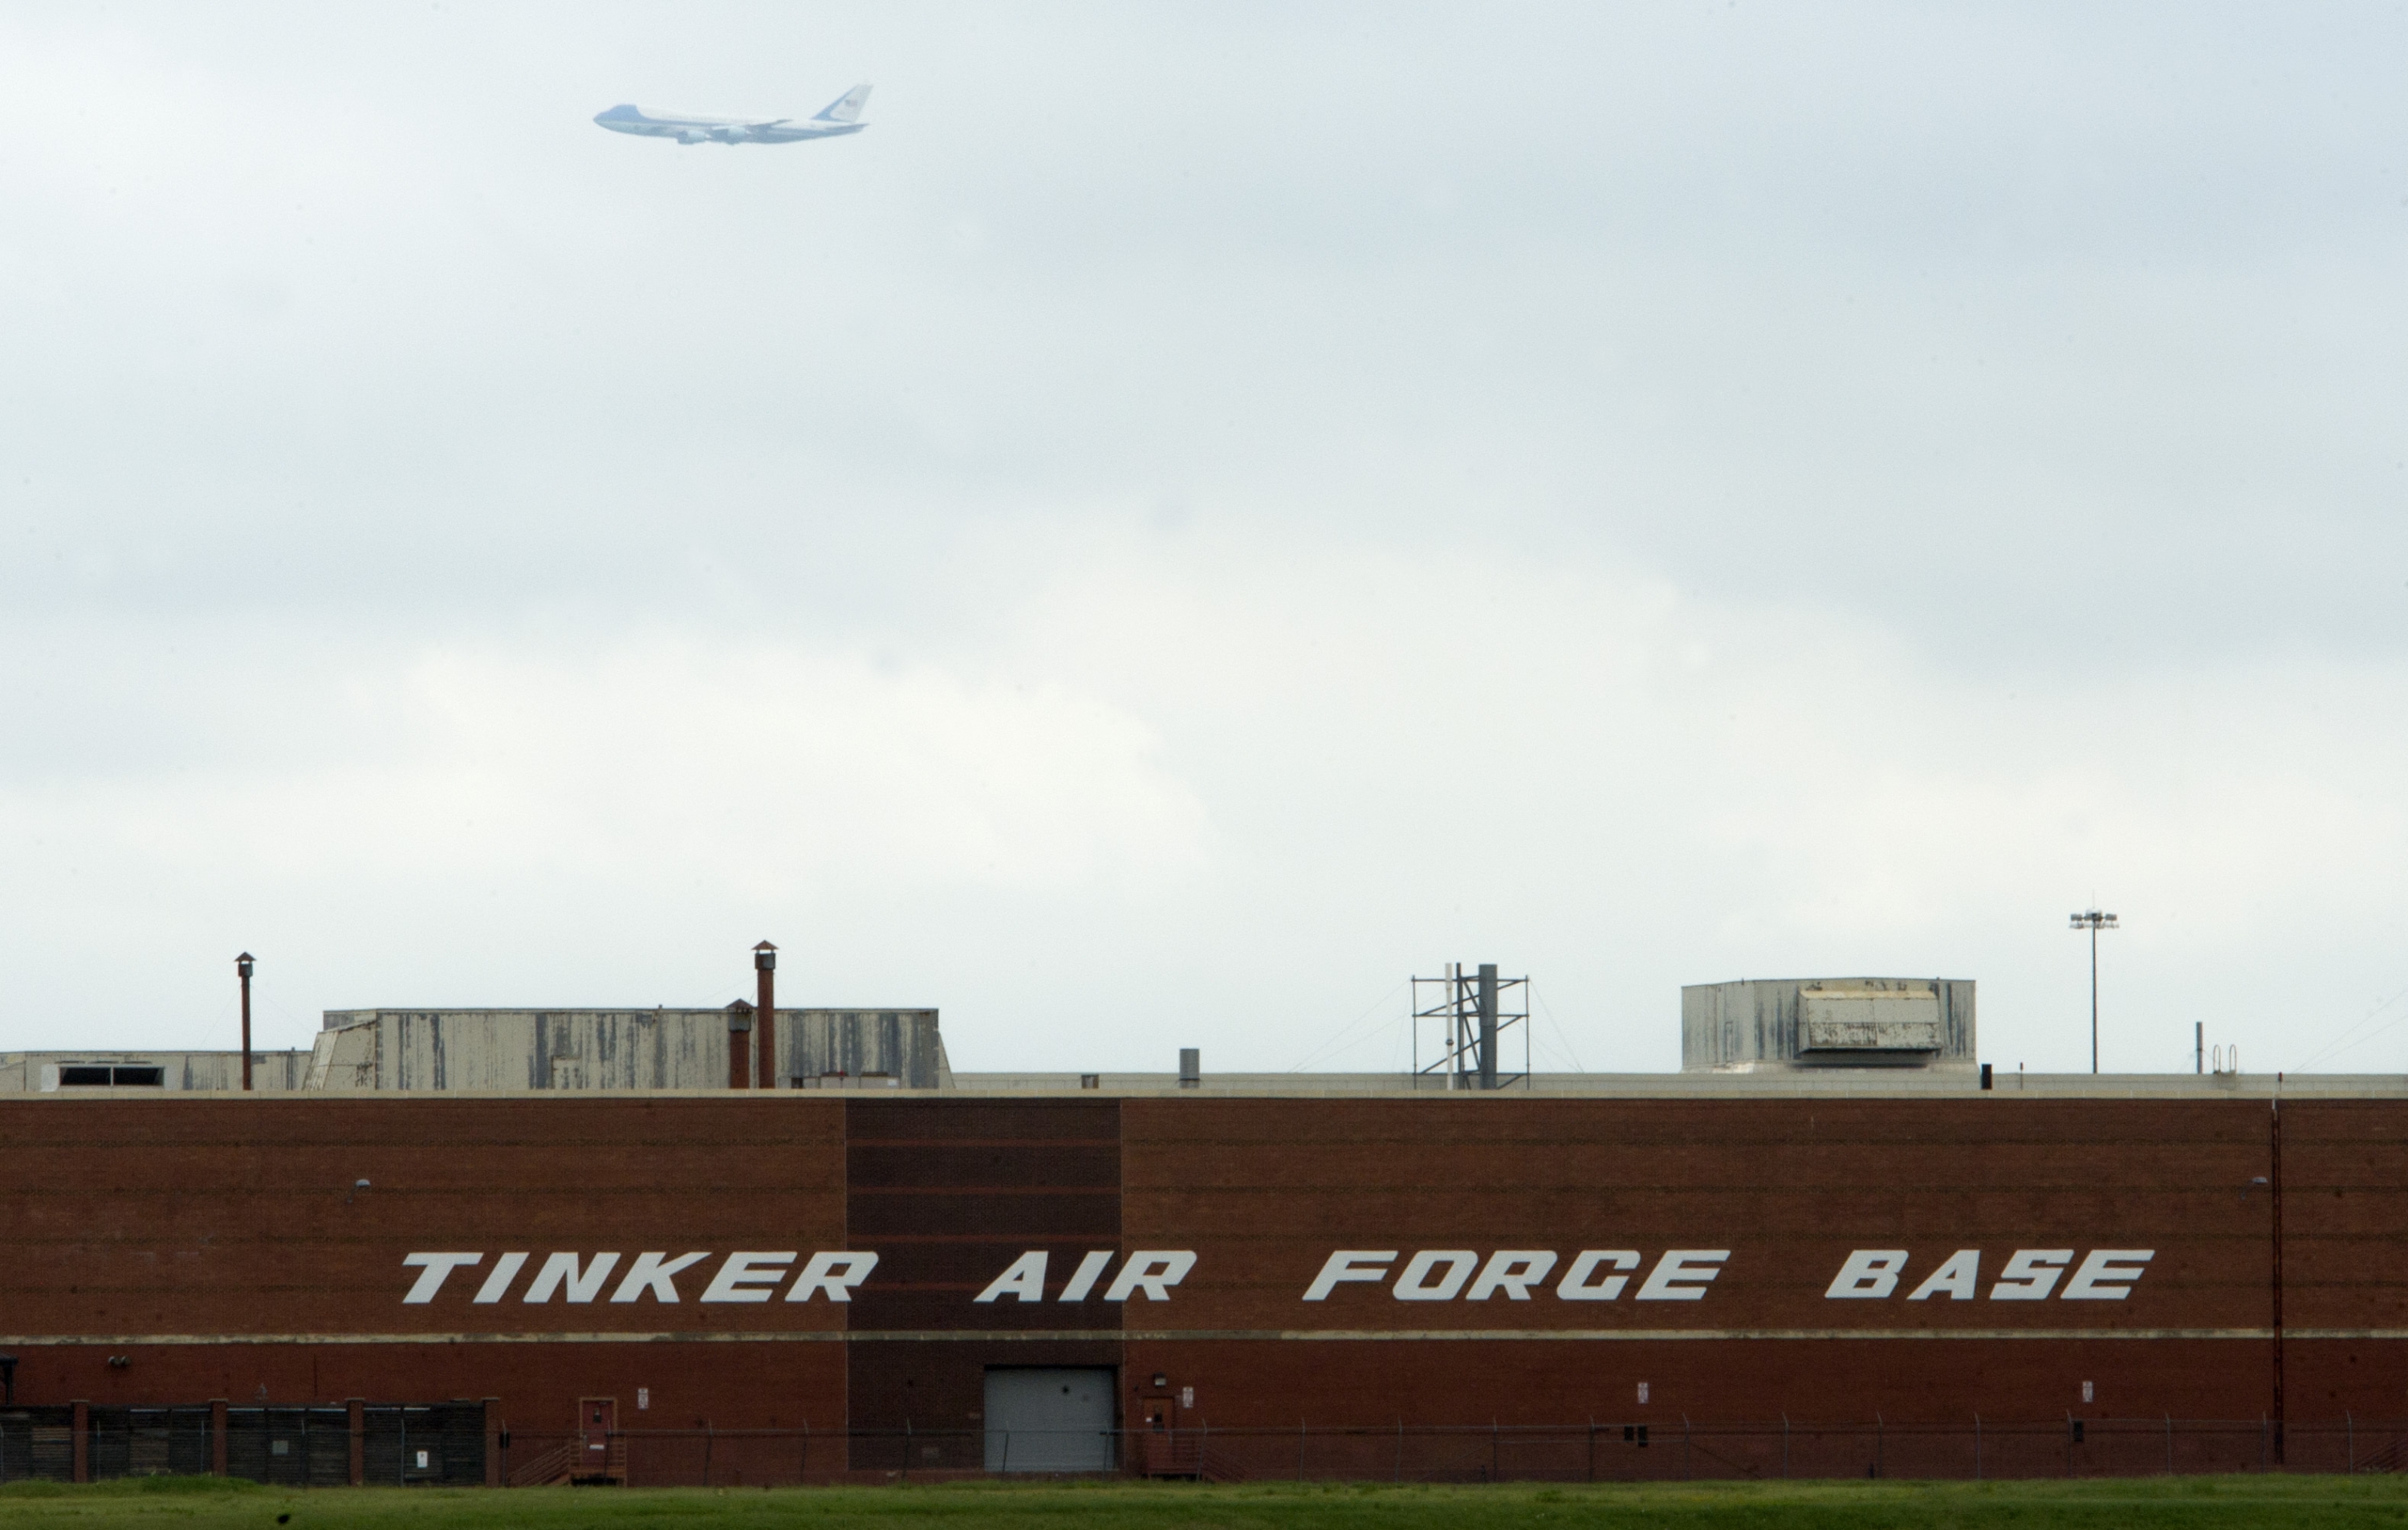 Tinker Air Force Base